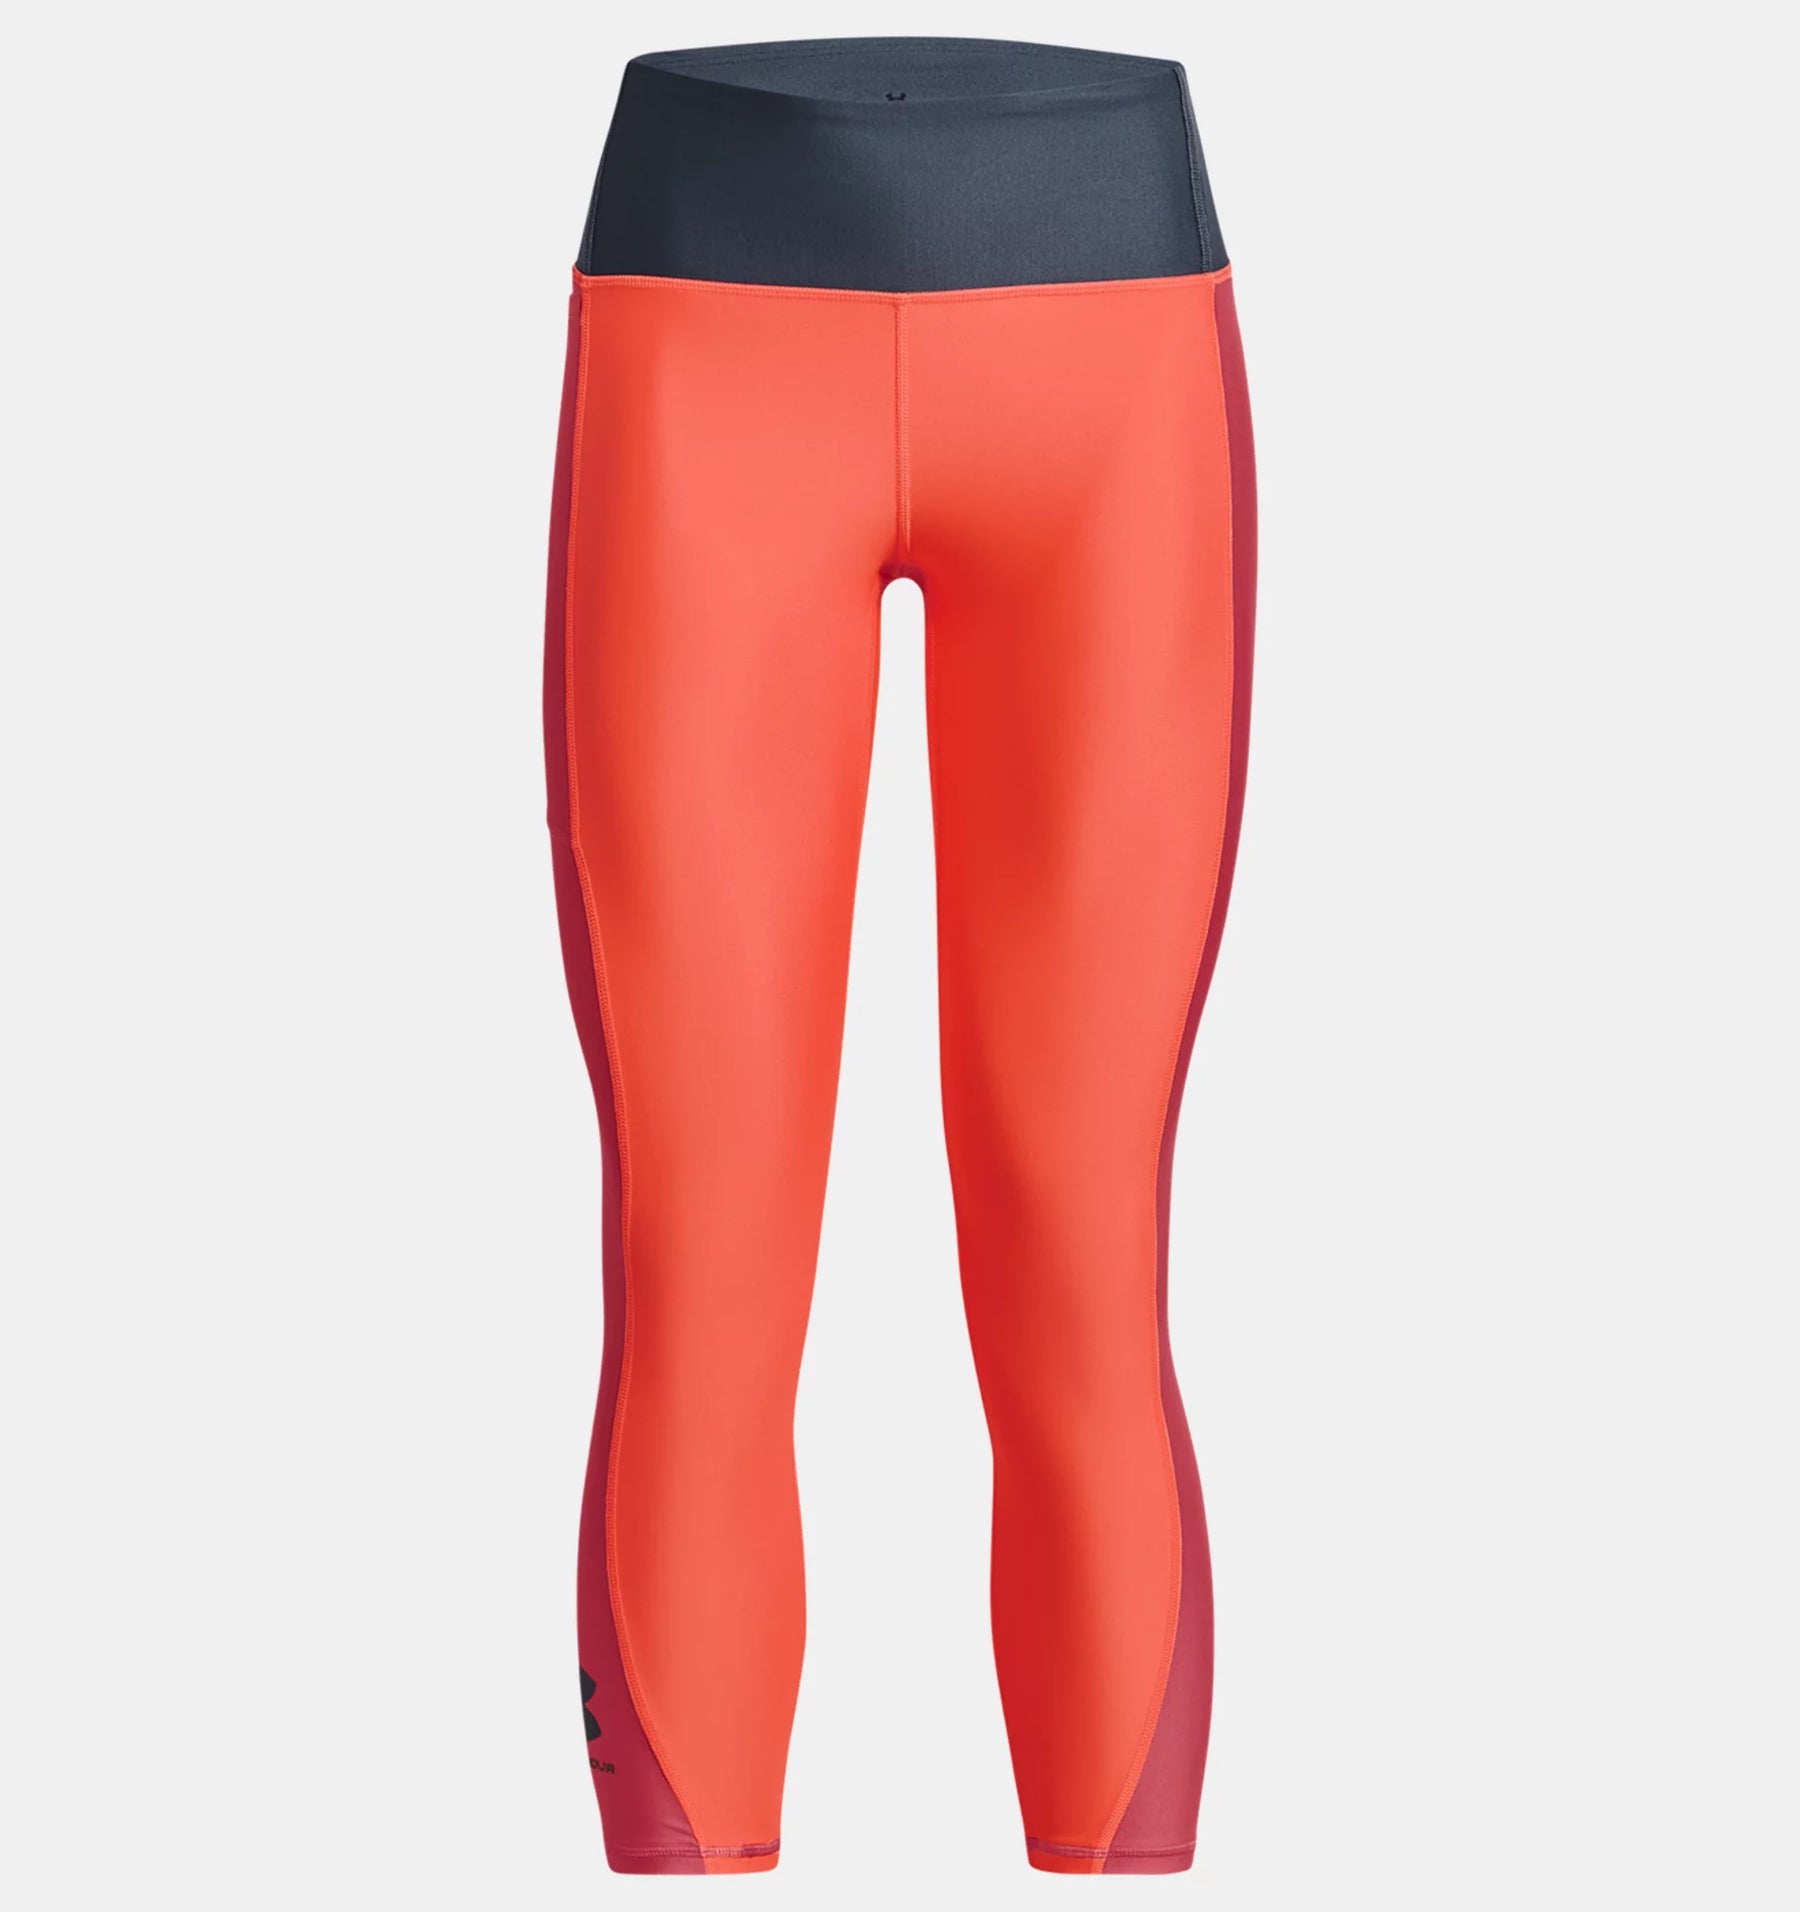 Buy Under Armour womens heat gear printed compression capri leggings  downpour gray Online